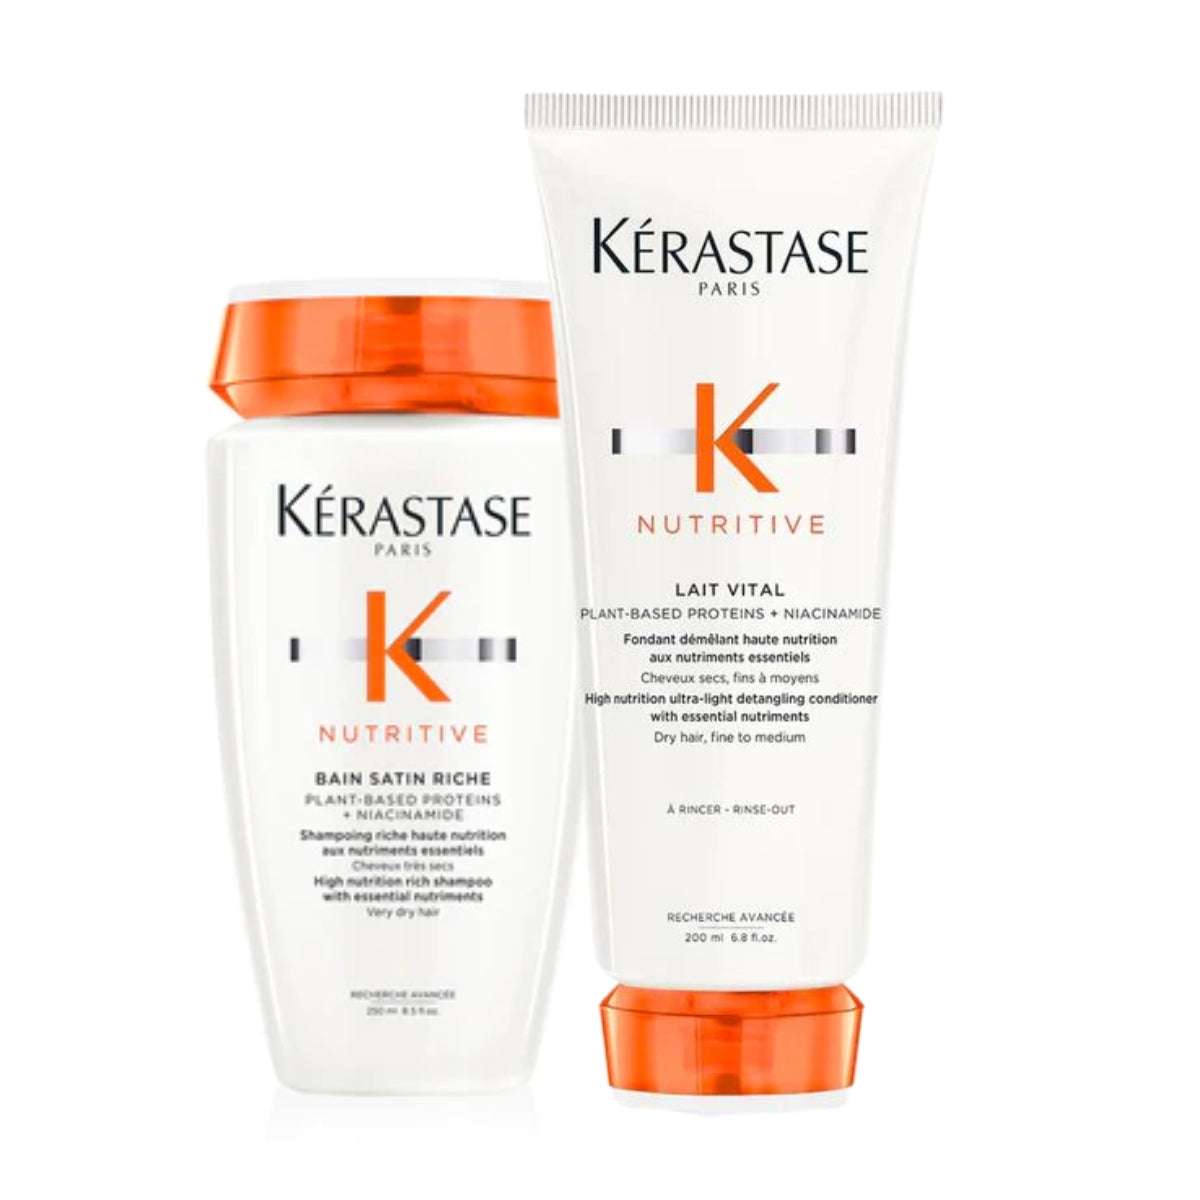 Kérastase Nutritive Duo for Very Dry Hair SAVE 15%